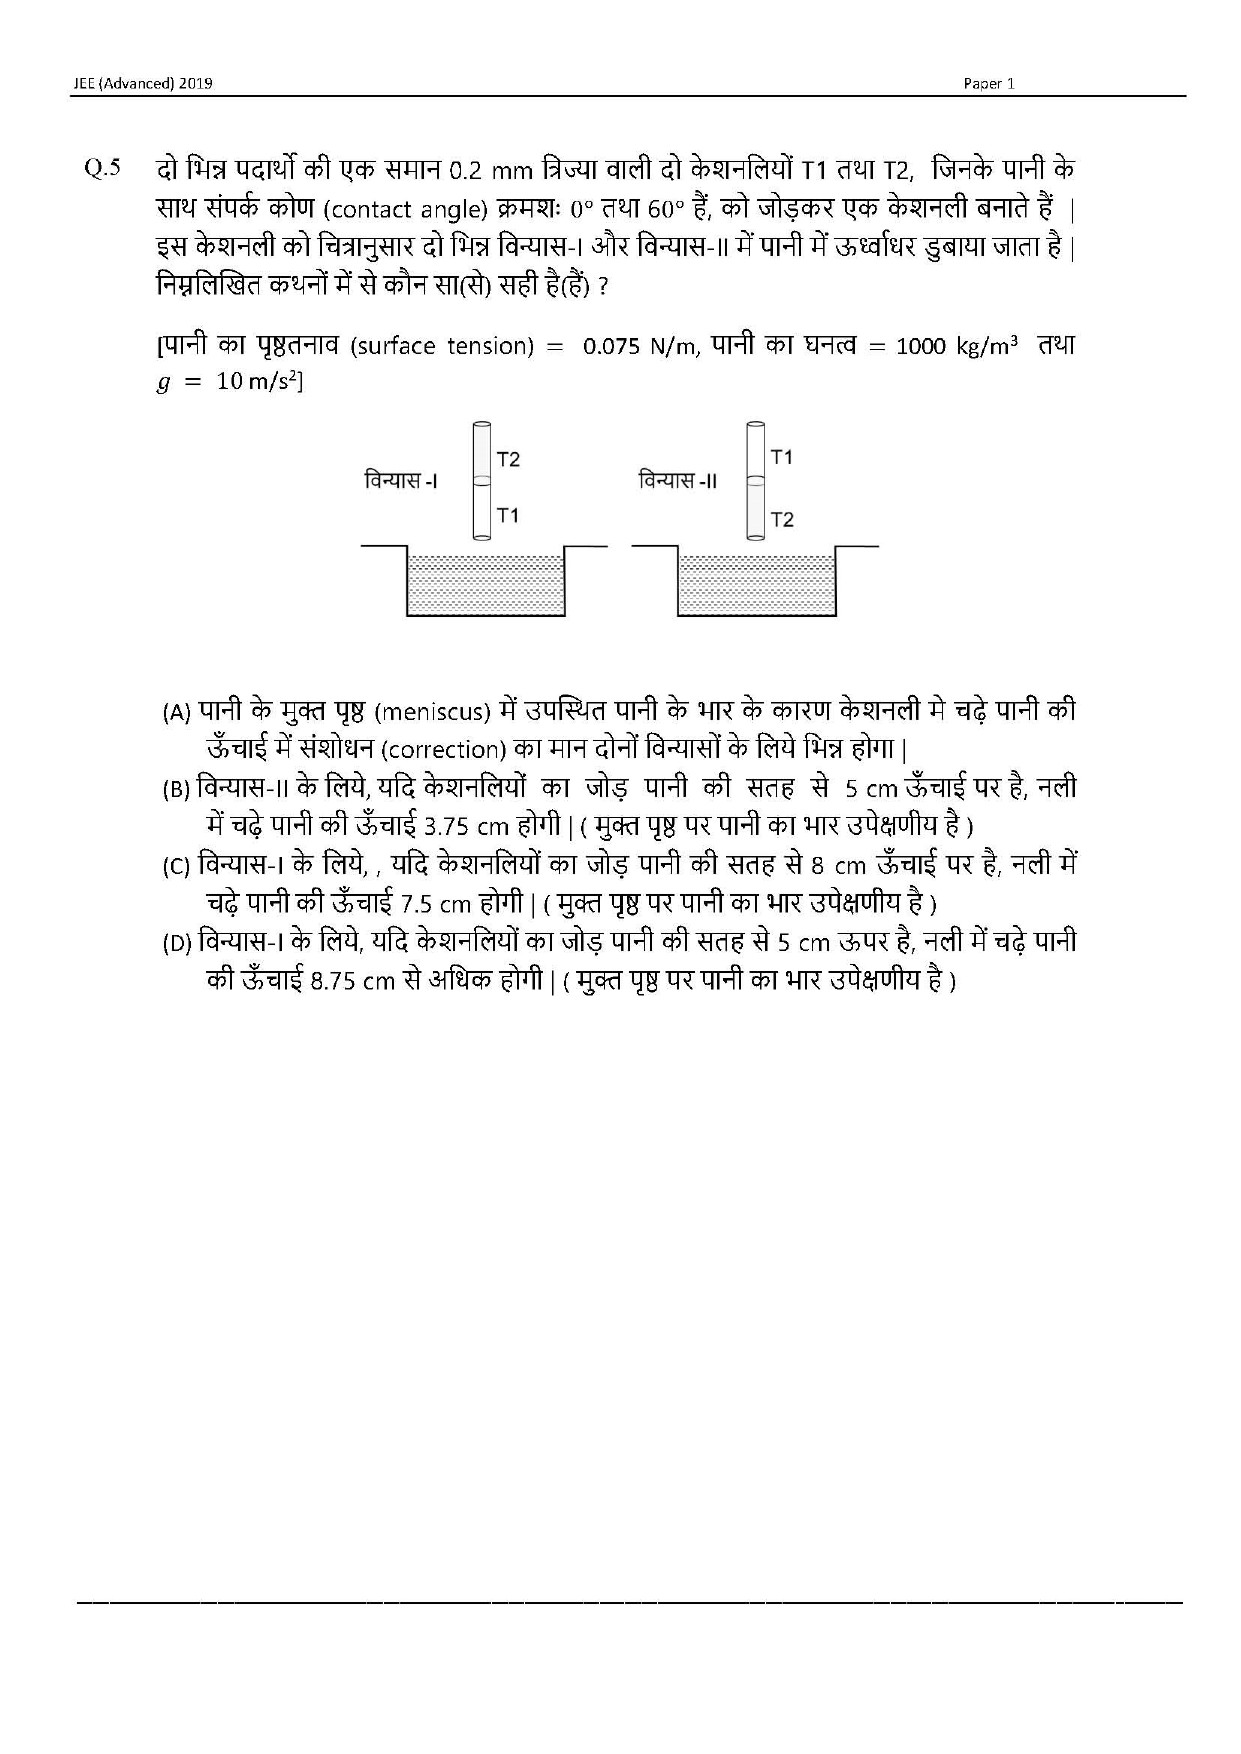 JEE Advanced Hindi Question Paper 2019 Paper 1 Physics 4